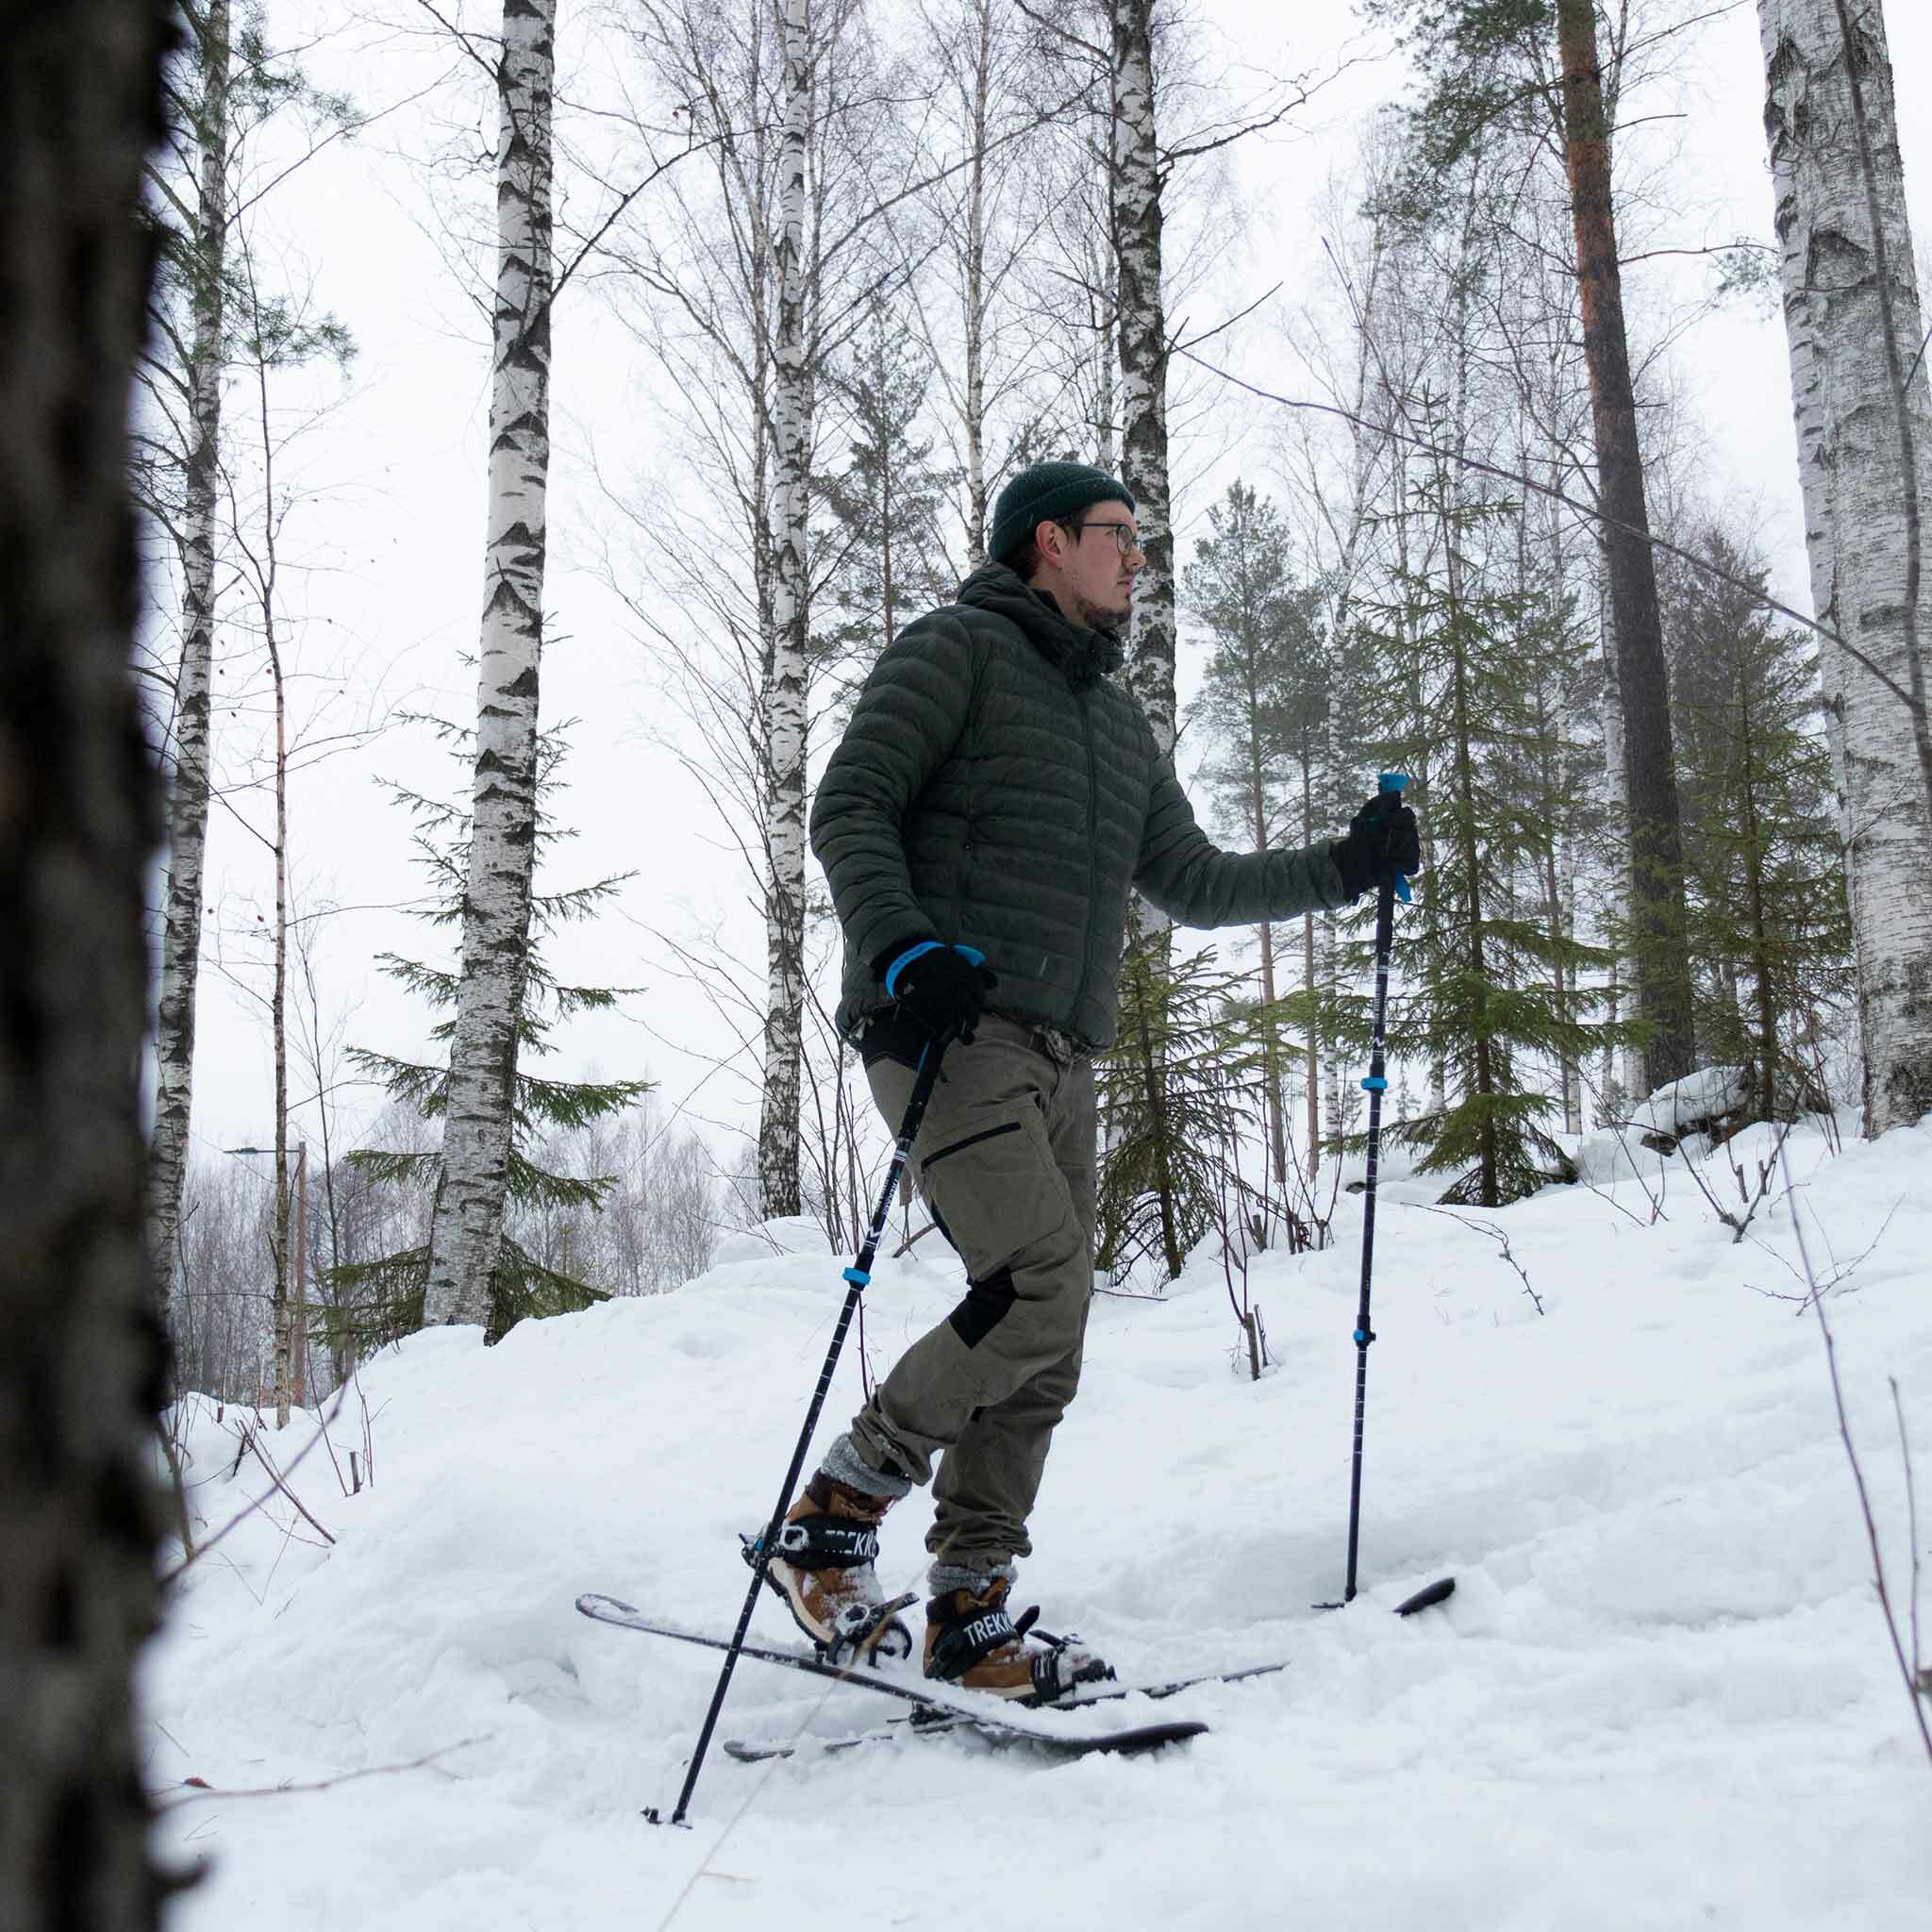 Trekker Chaussures d'hiver avec crampons Trekking - Nordic ProStore